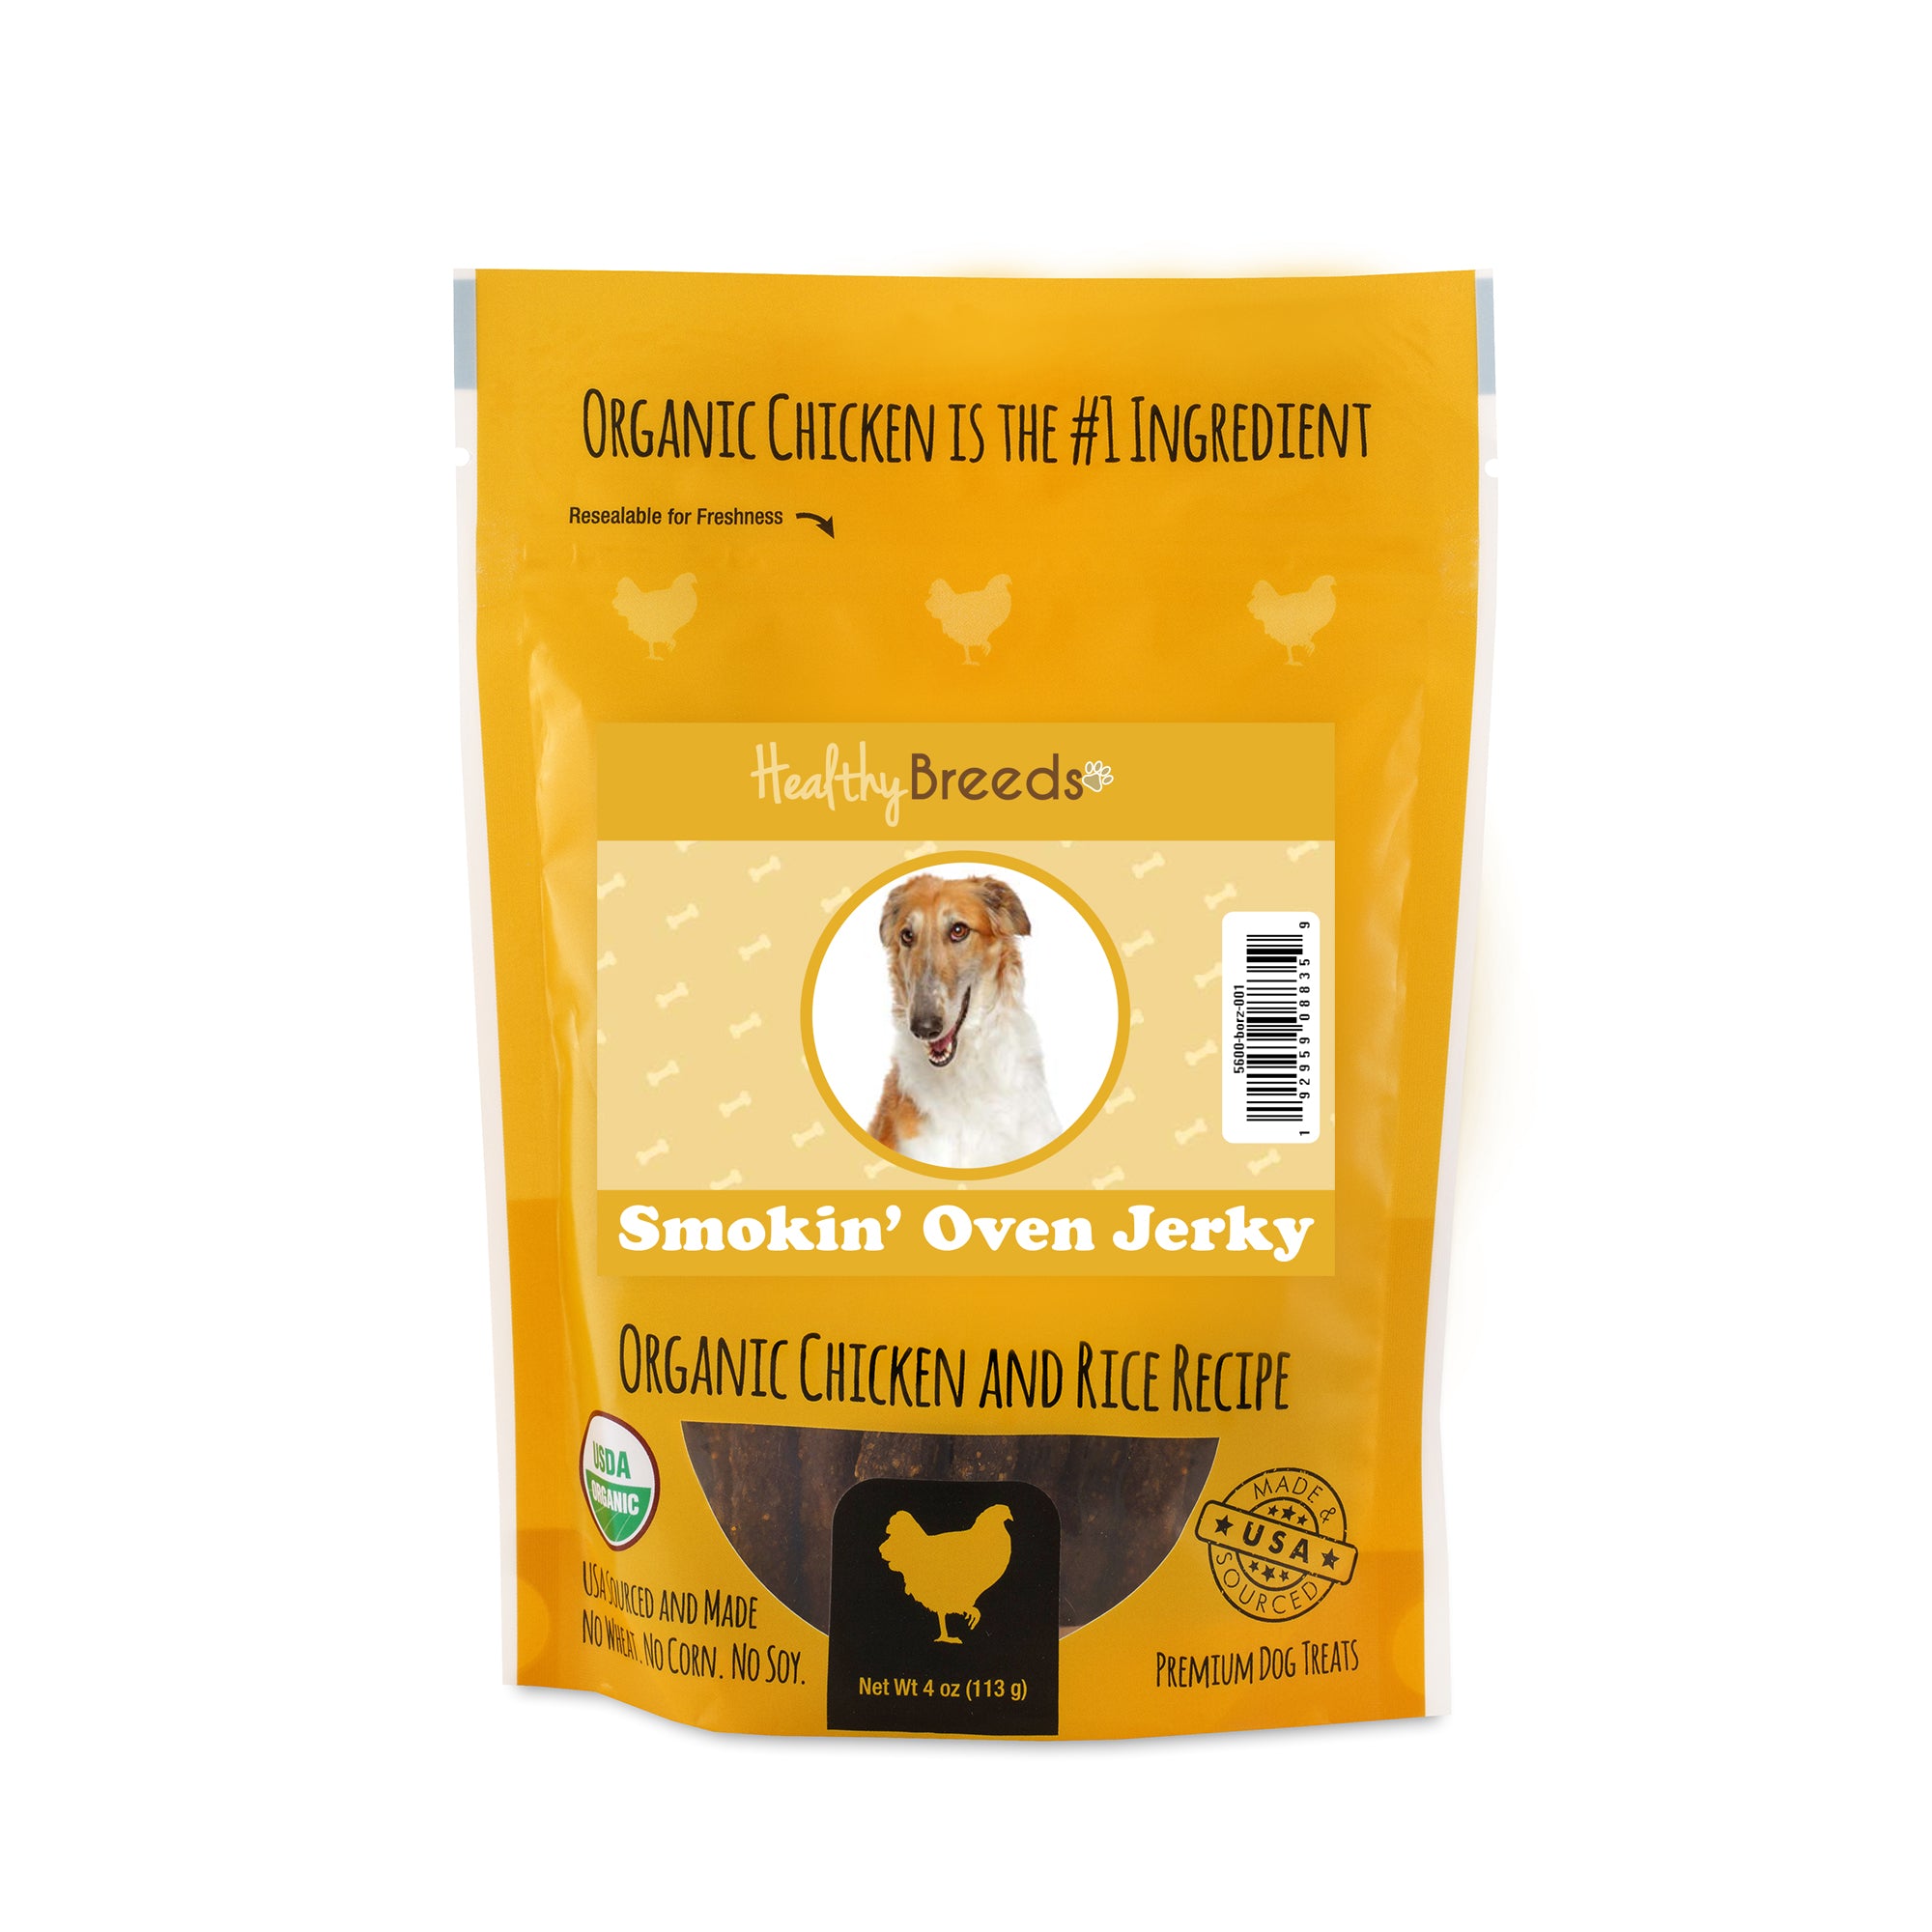 Borzois Smokin' Oven Organic Chicken & Rice Recipe Jerky Dog Treats 4 oz